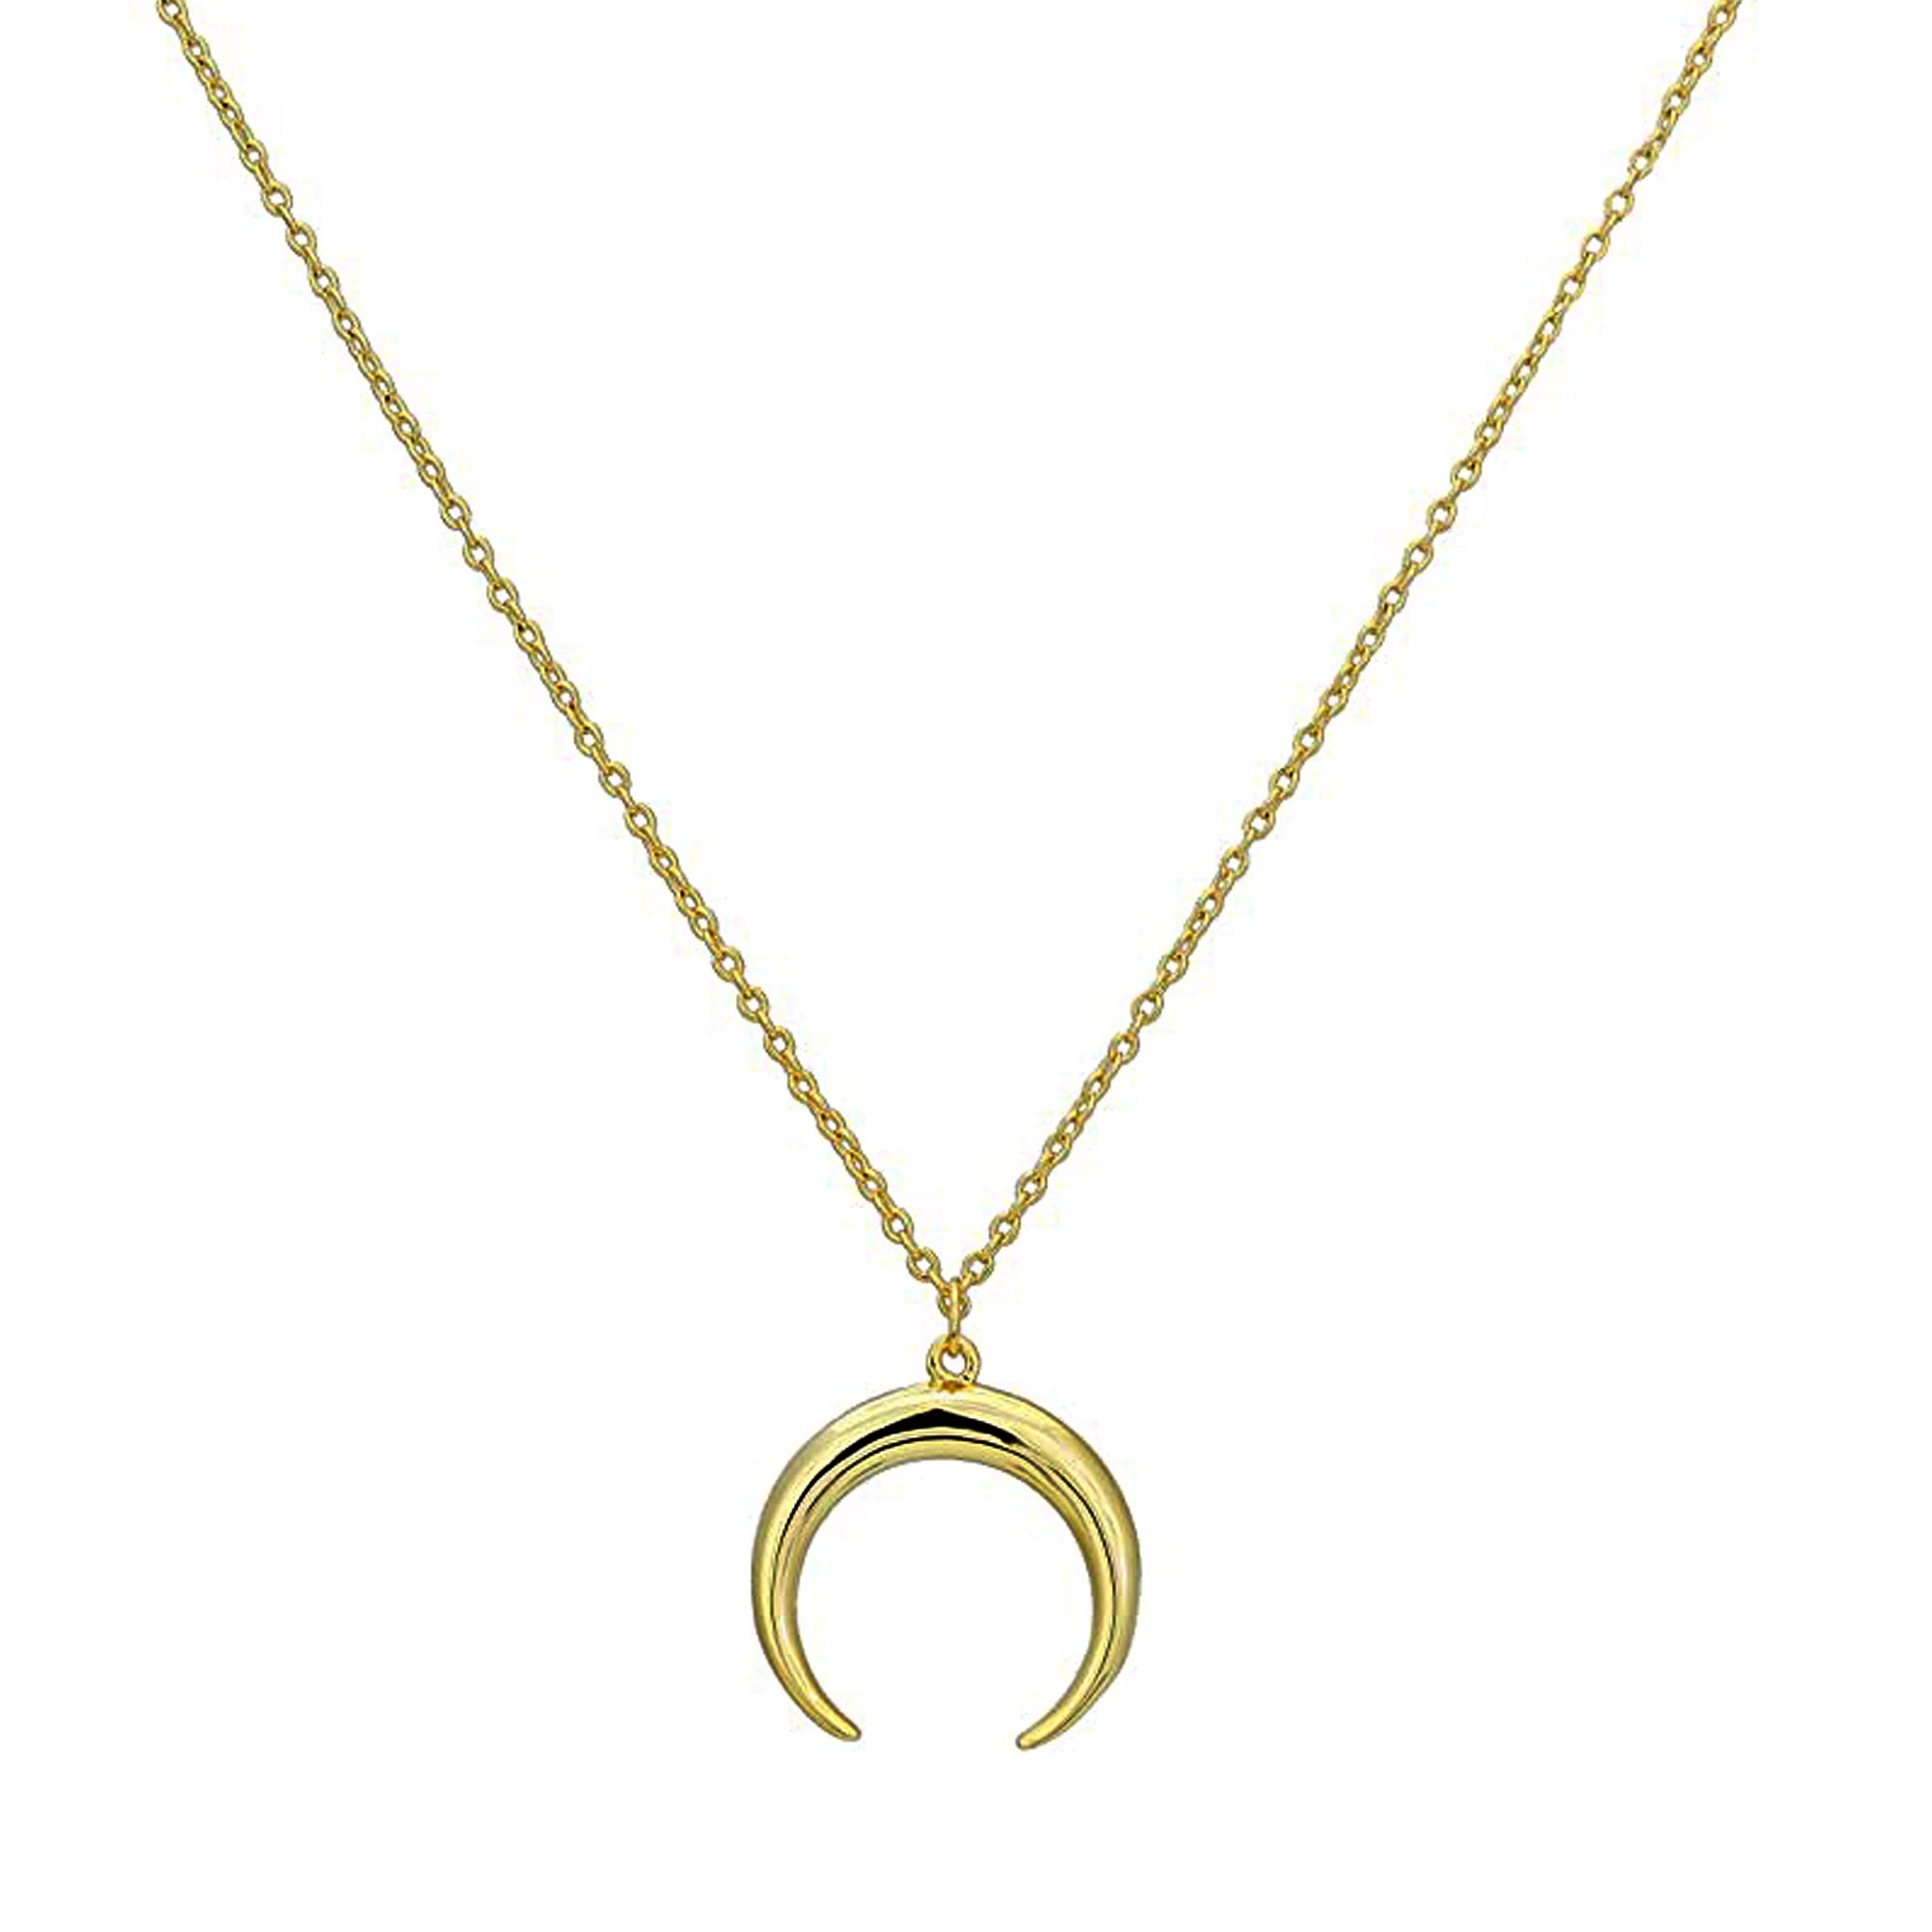 14K Gold Crescent Moon Pendant Necklace, 18